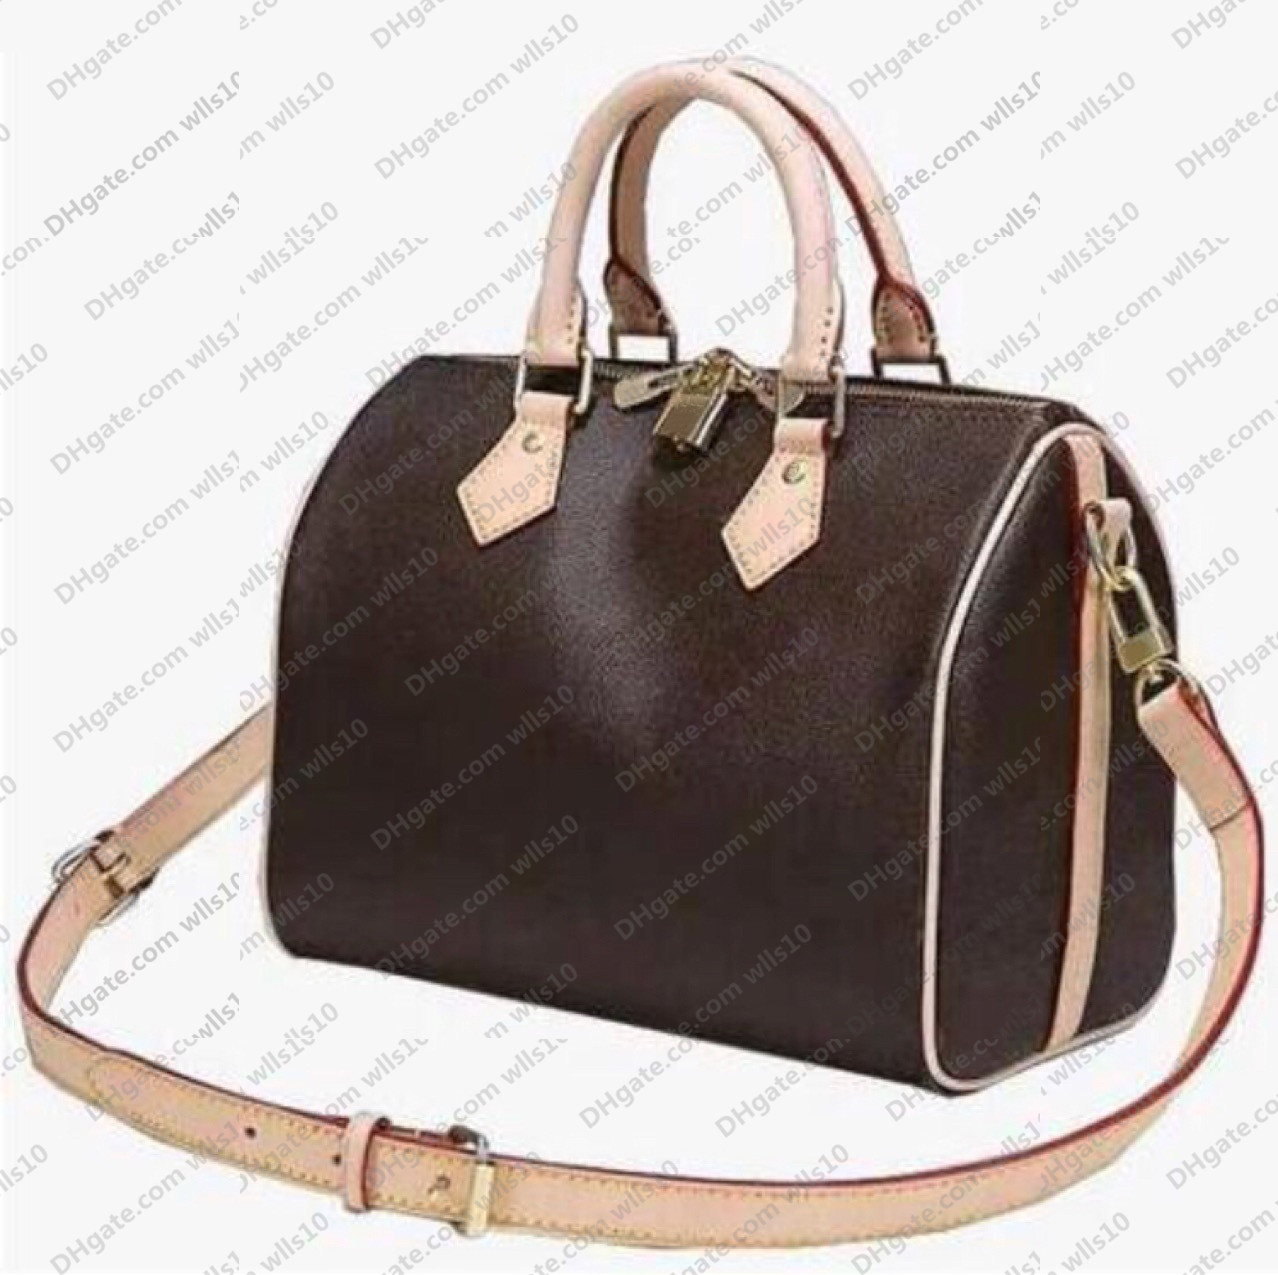 Image of Handbags purses women bag shoulder bag Totes fashion leather clutch Backpack Woman Tote Purse Brown Boston Bags handbag Series code LB126